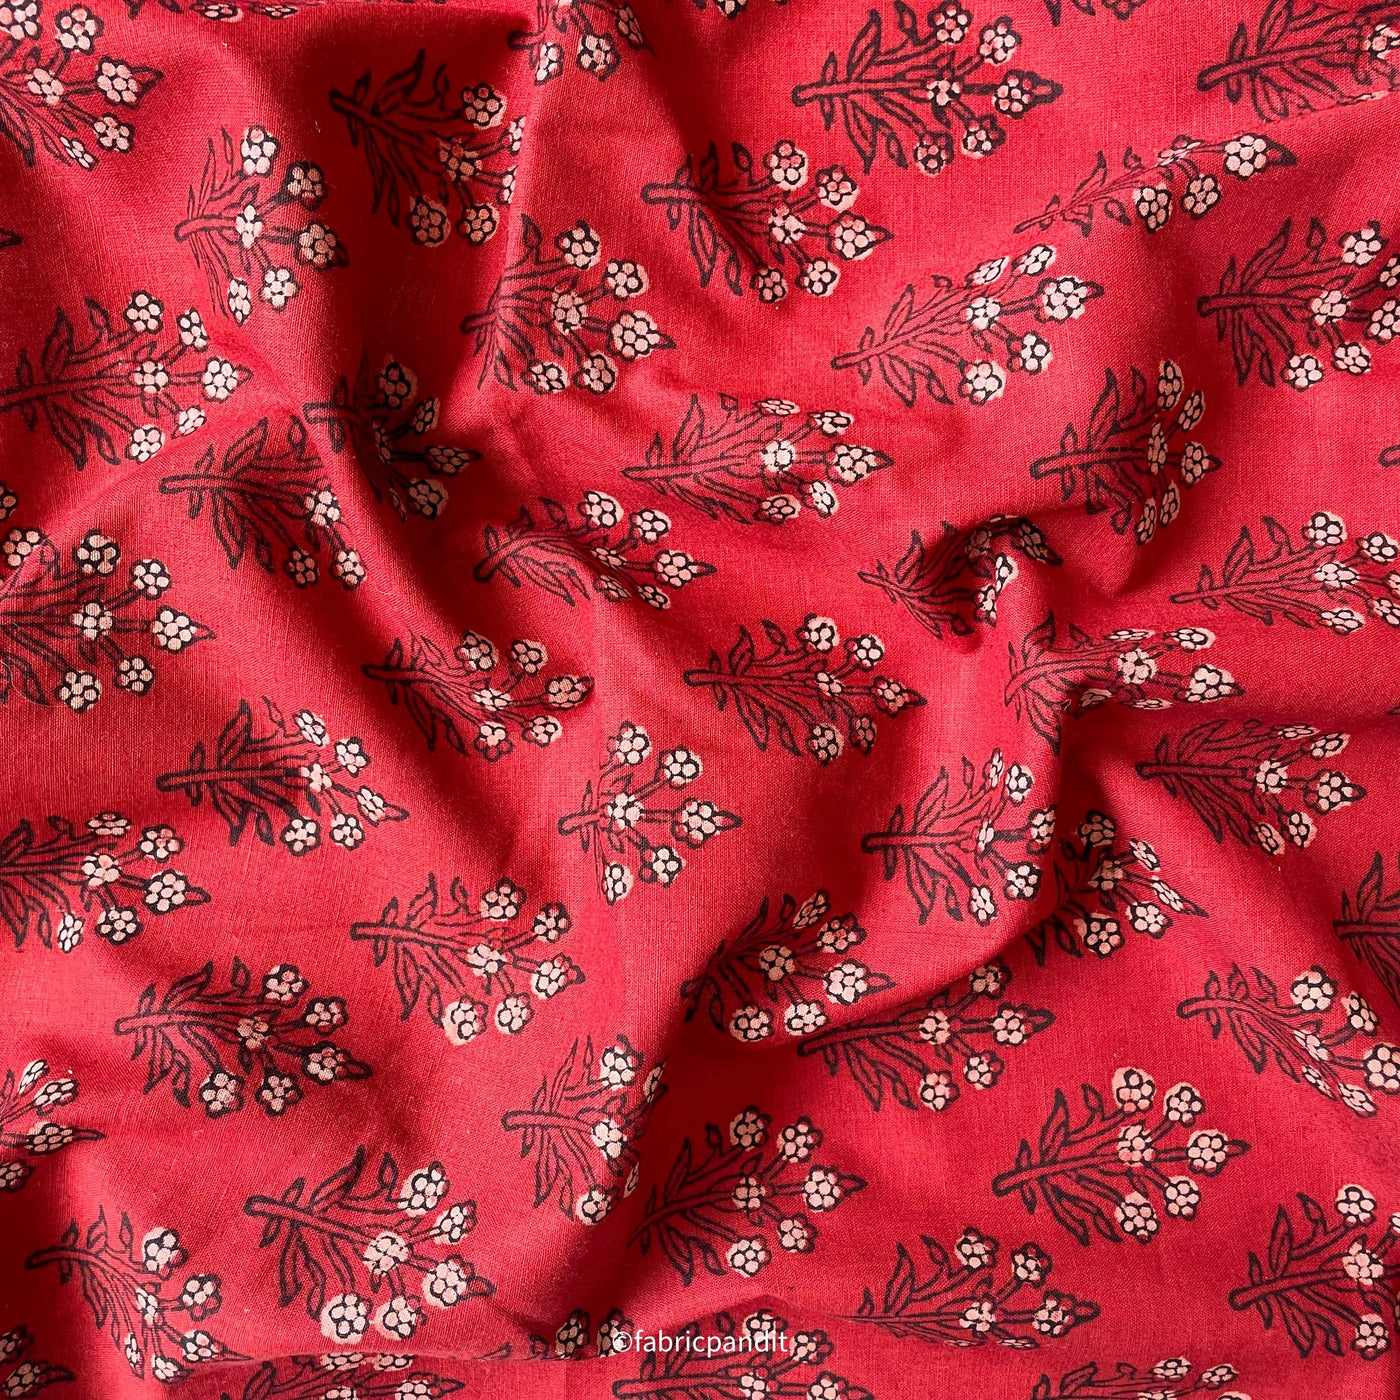 Hand Block Printed Cotton Fabric Cut Piece (CUT PIECE) Dusty Red & Beige Daisy Flower Bunch Hand Block Printed Pure Cotton Fabric (Width 42 inches)